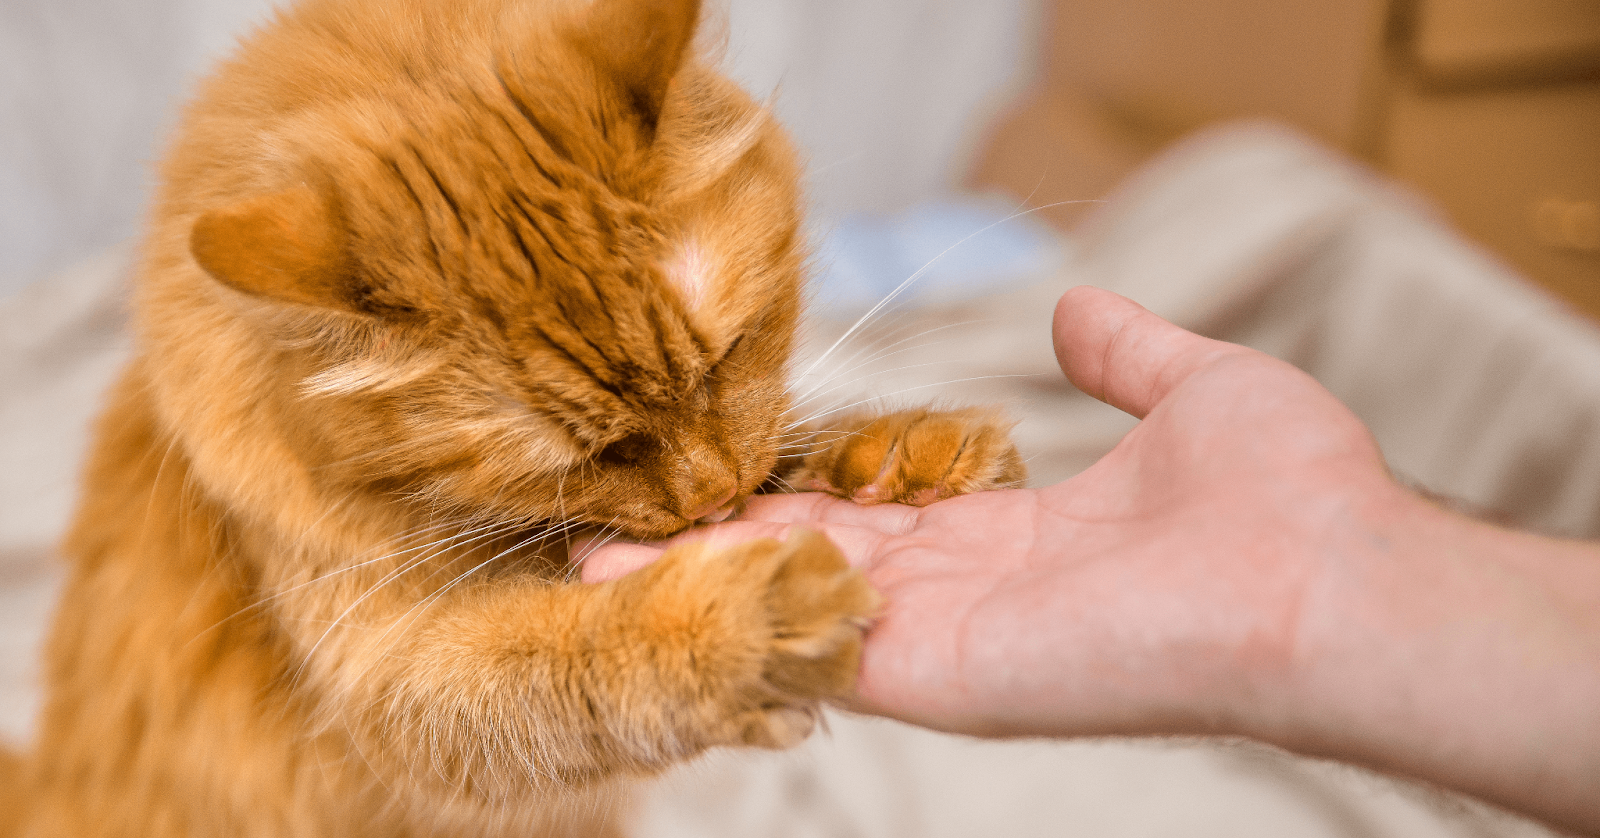 ginger cat licking human hand